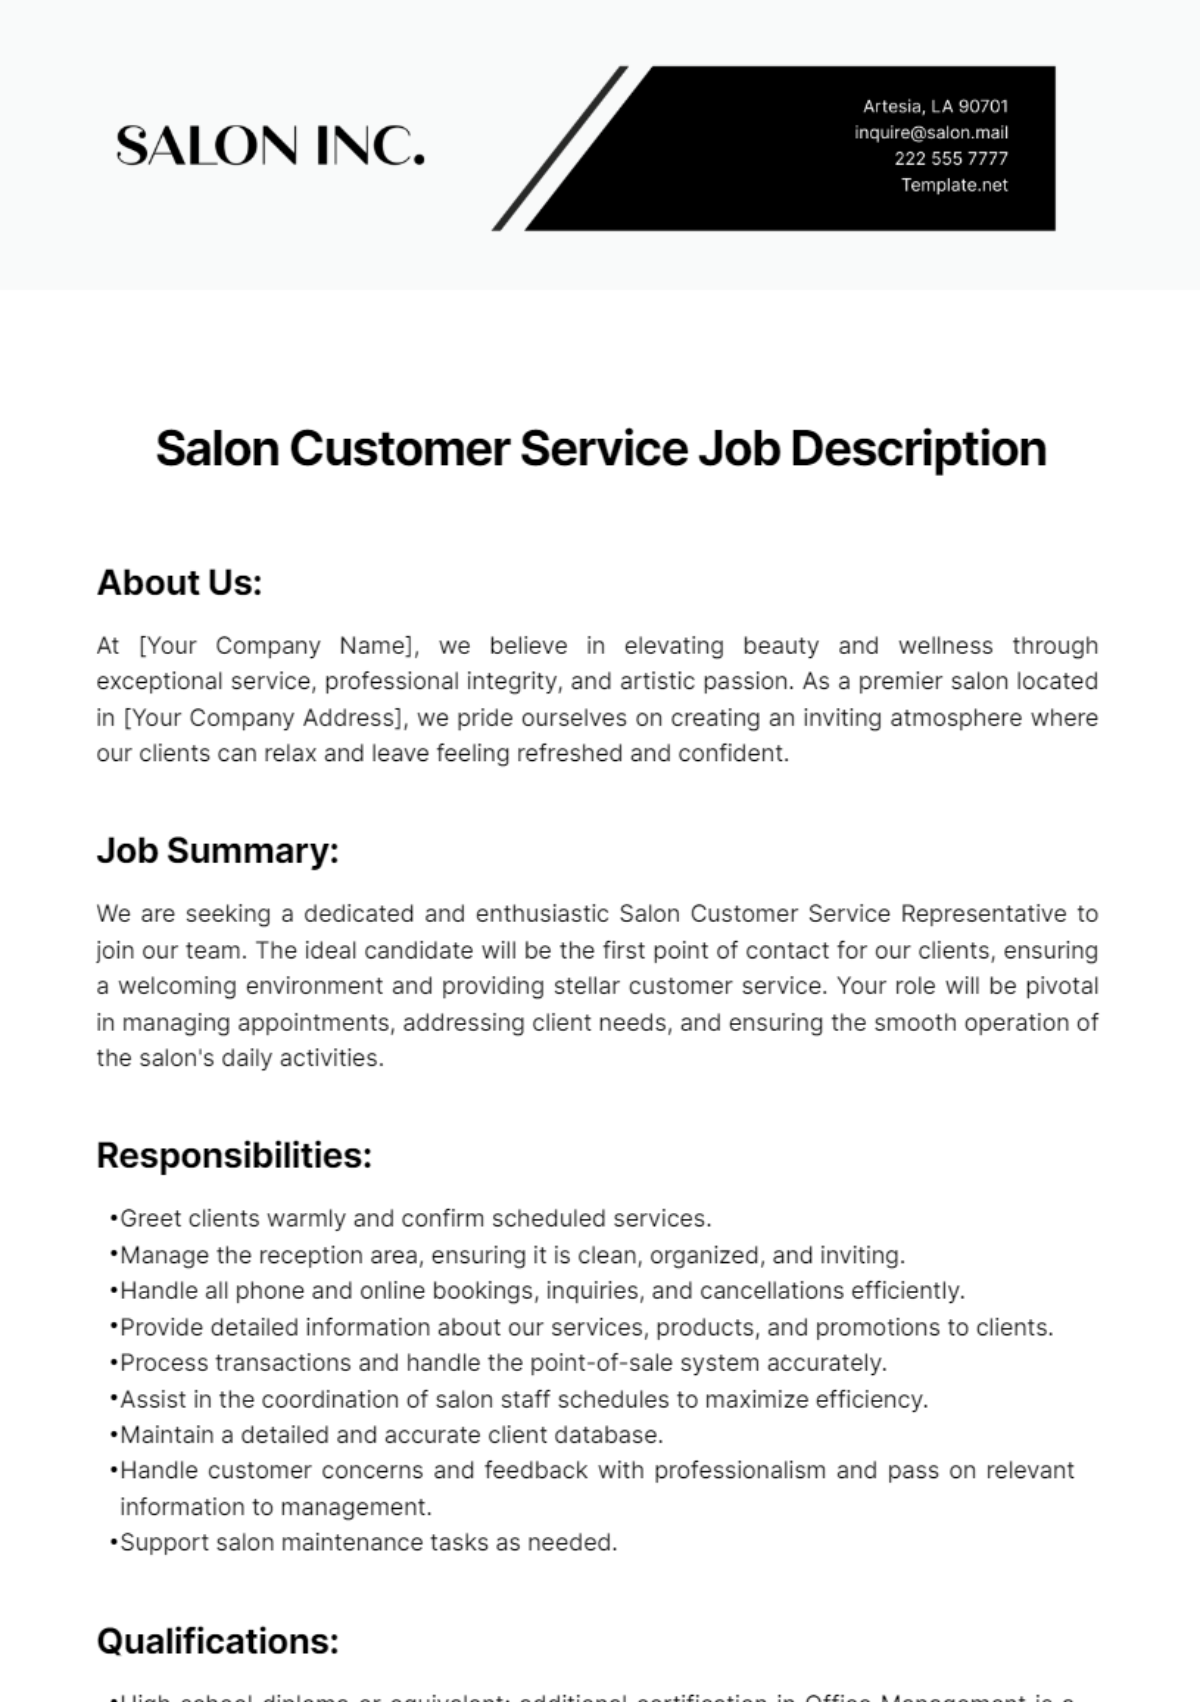 Free Salon Customer Service Job Description Template